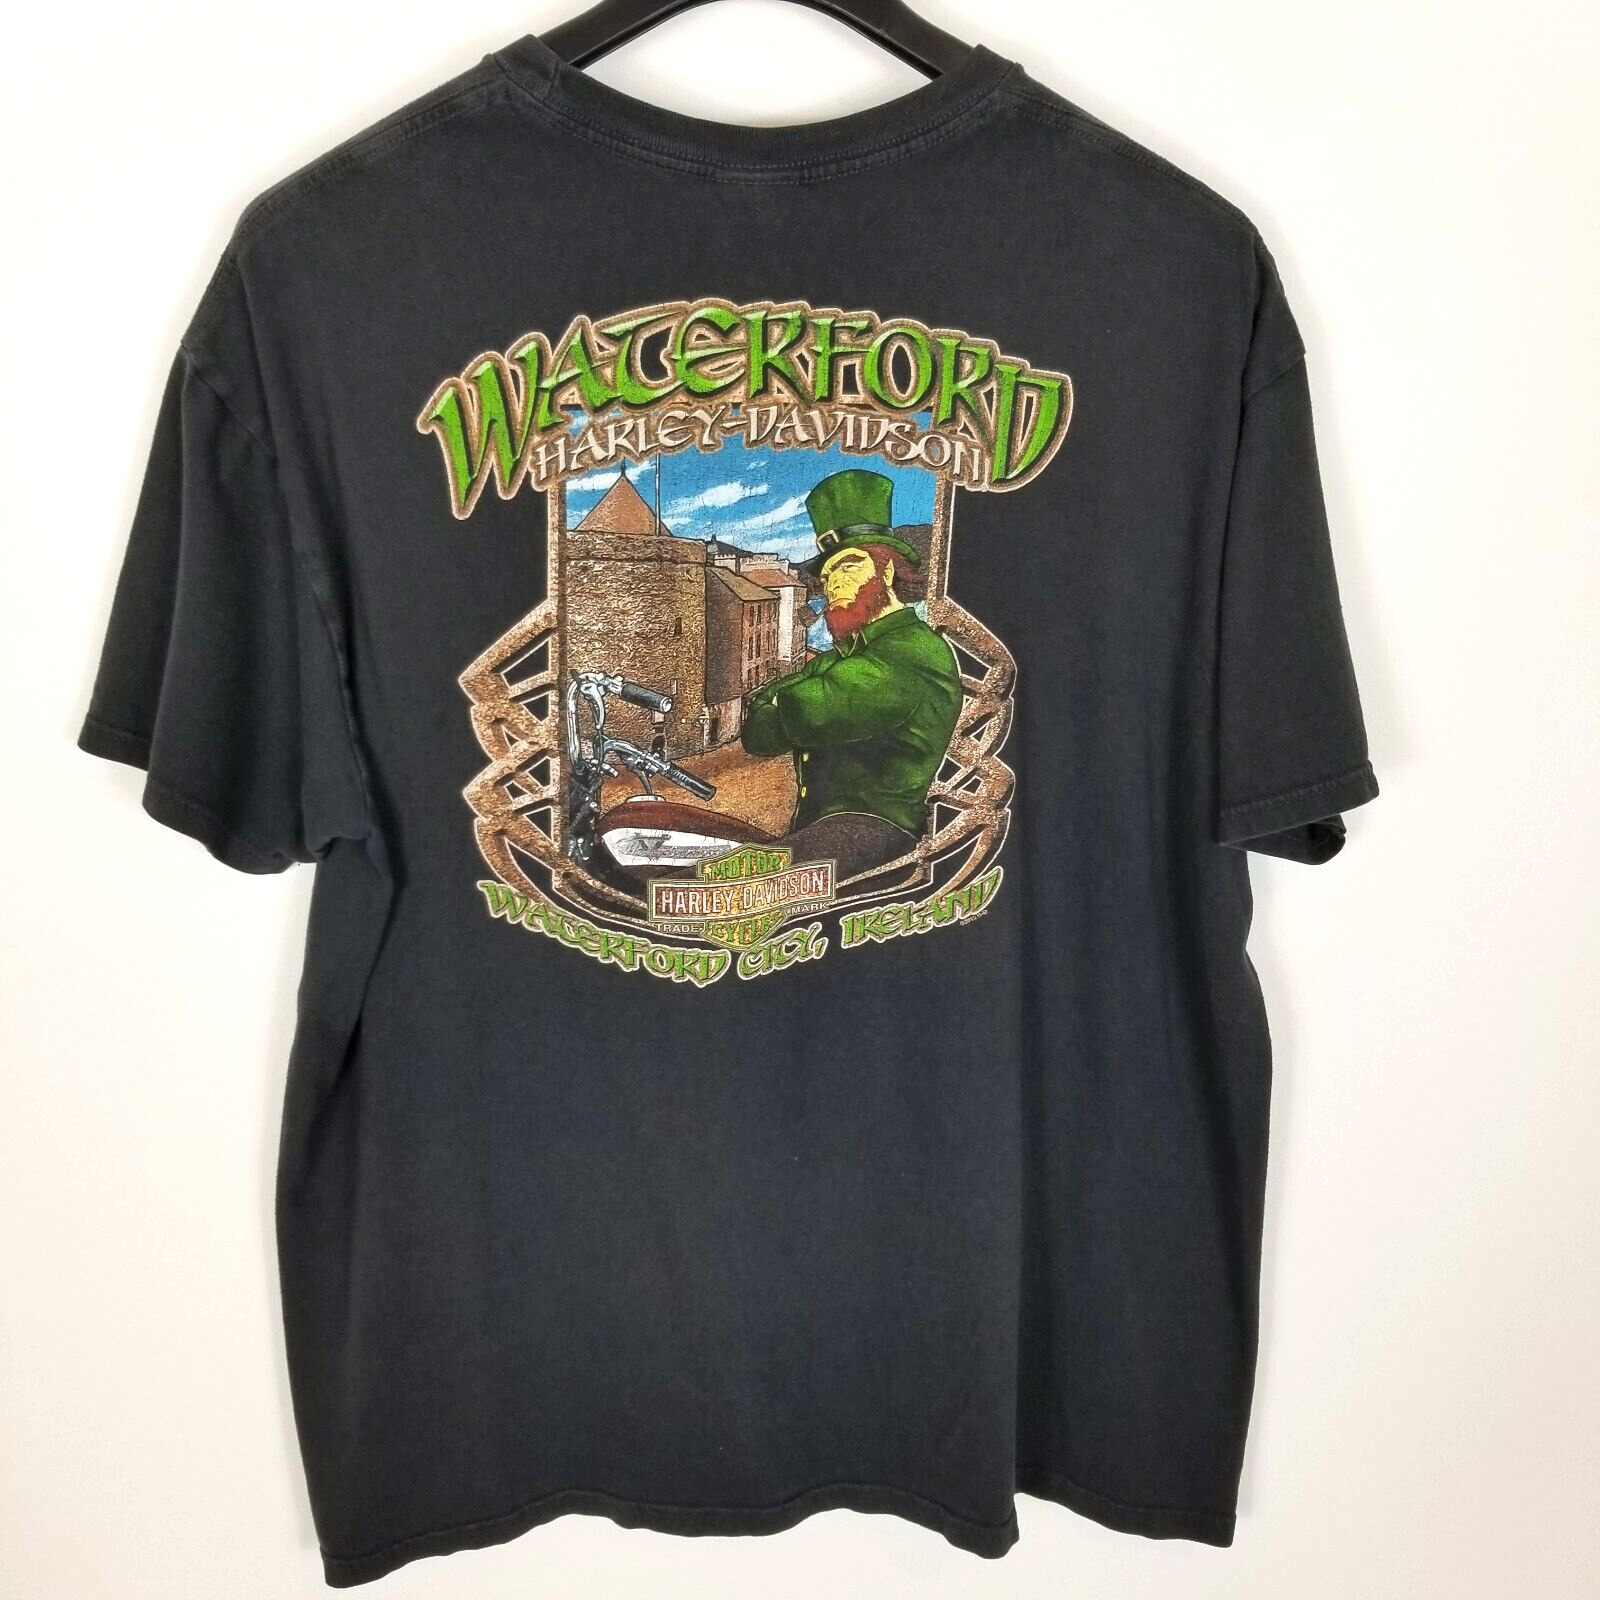 Harley Davidson Motorcycles Waterford Ireland T Shirt Size XL Black Short Sleeve